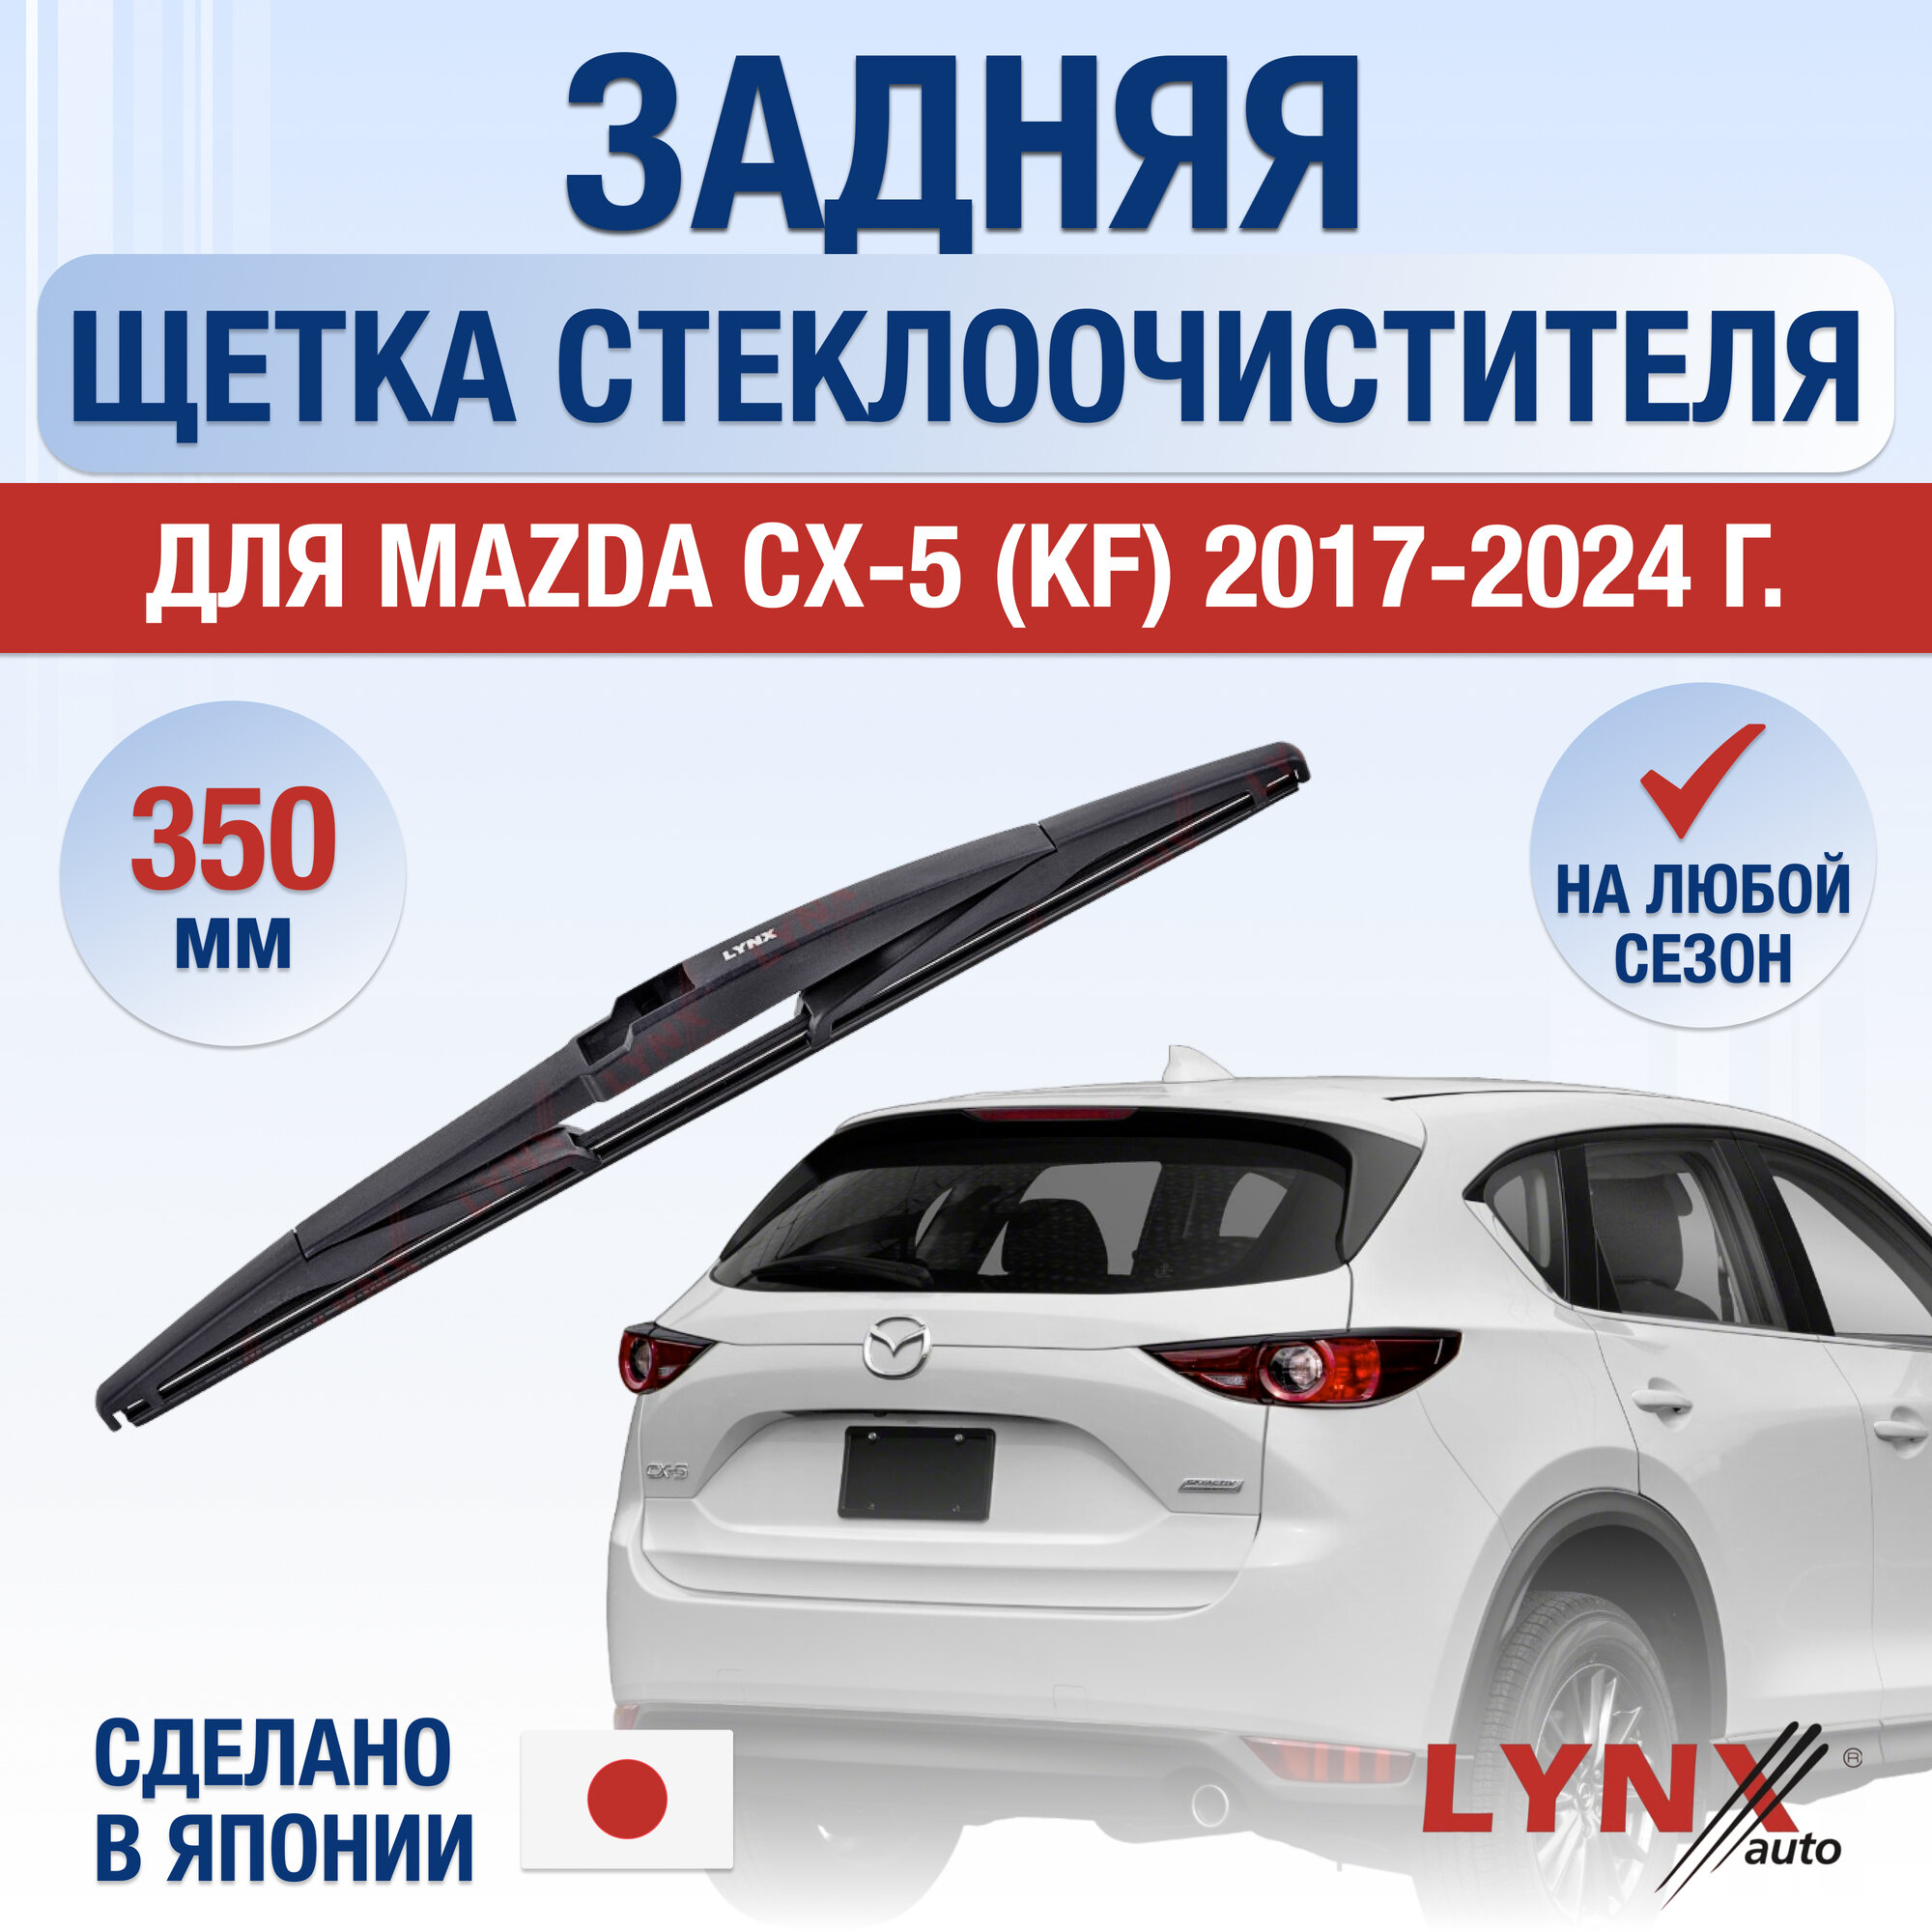 Задняя щетка стеклоочистителя для Mazda CX-5 (2) KF / 2017 2018 2019 2020 2021 2022 2023 2024 / Задний дворник 350 мм Мазда СХ-5